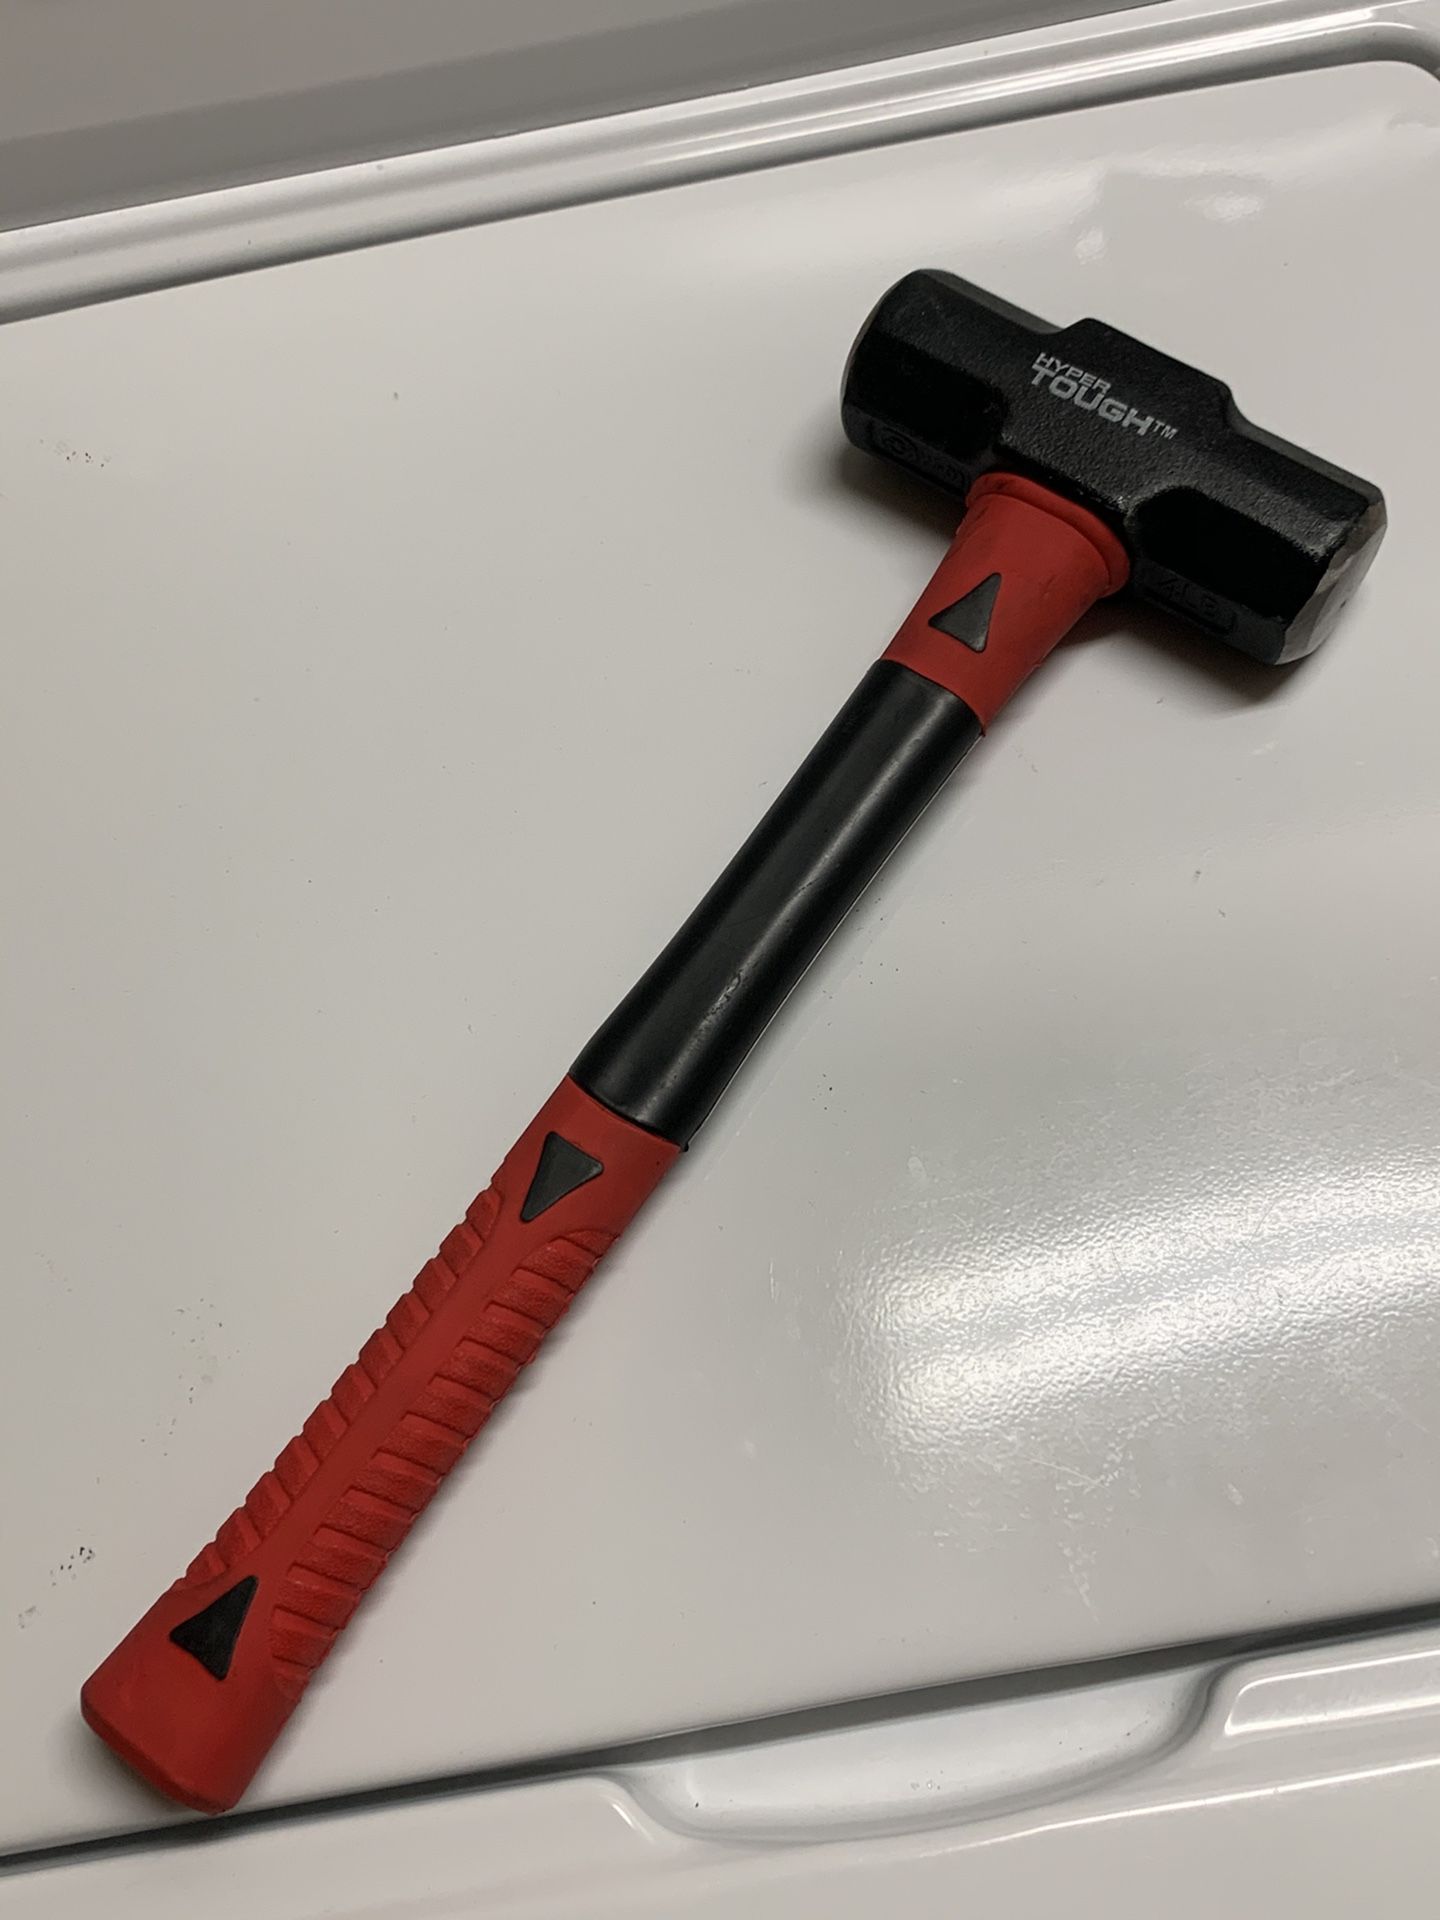 Sledge hammer 4lb. Tool